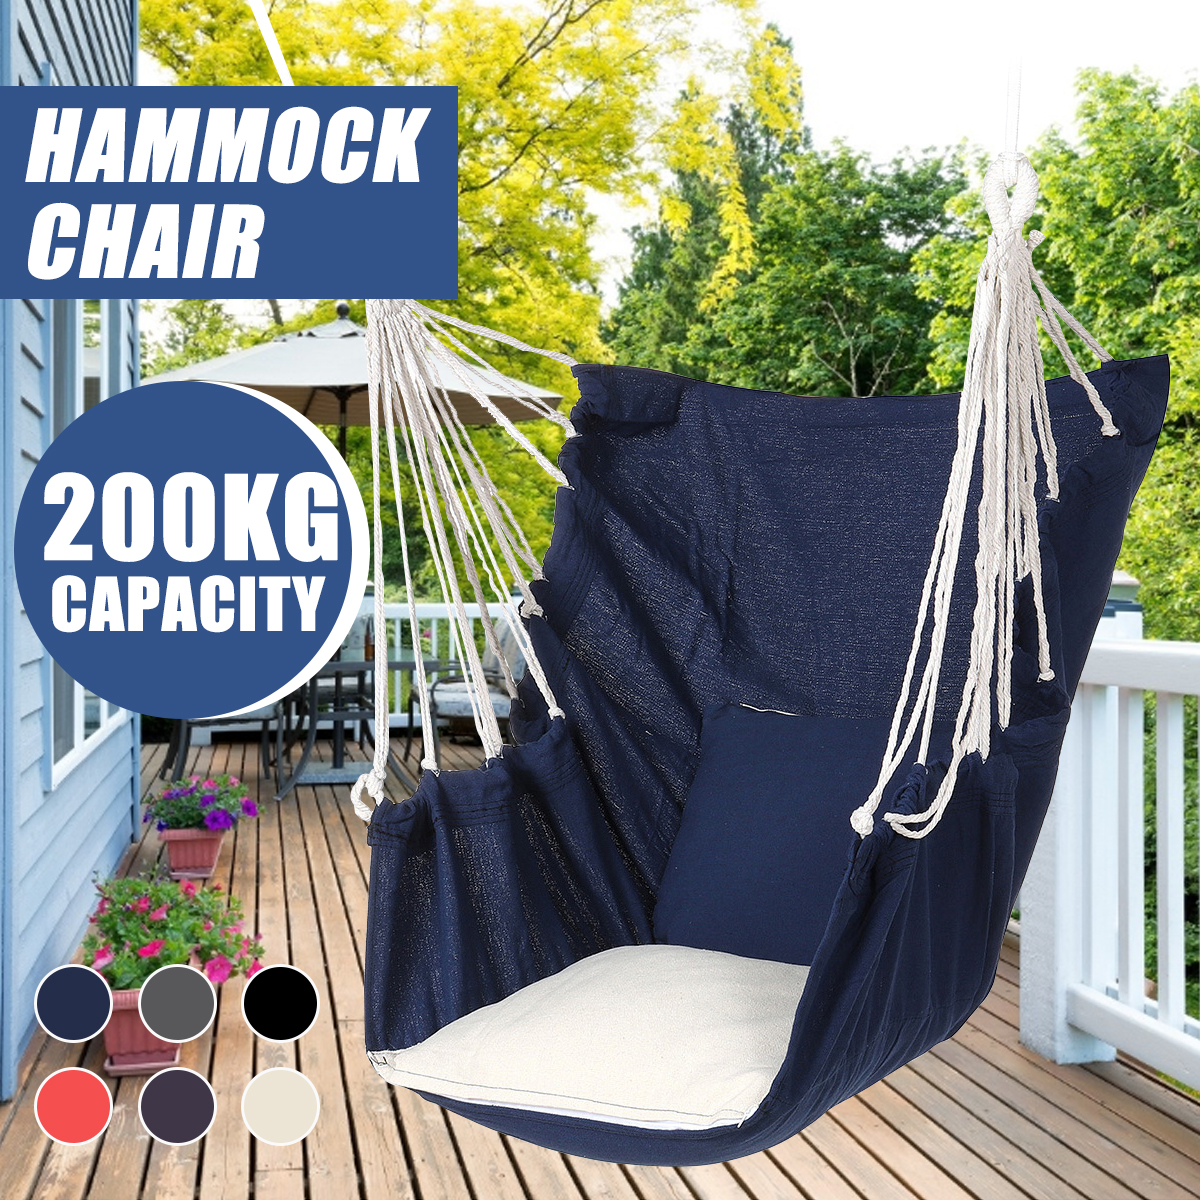 Hanging Rope Chair Max Load 200KG Hammock Swing Seat